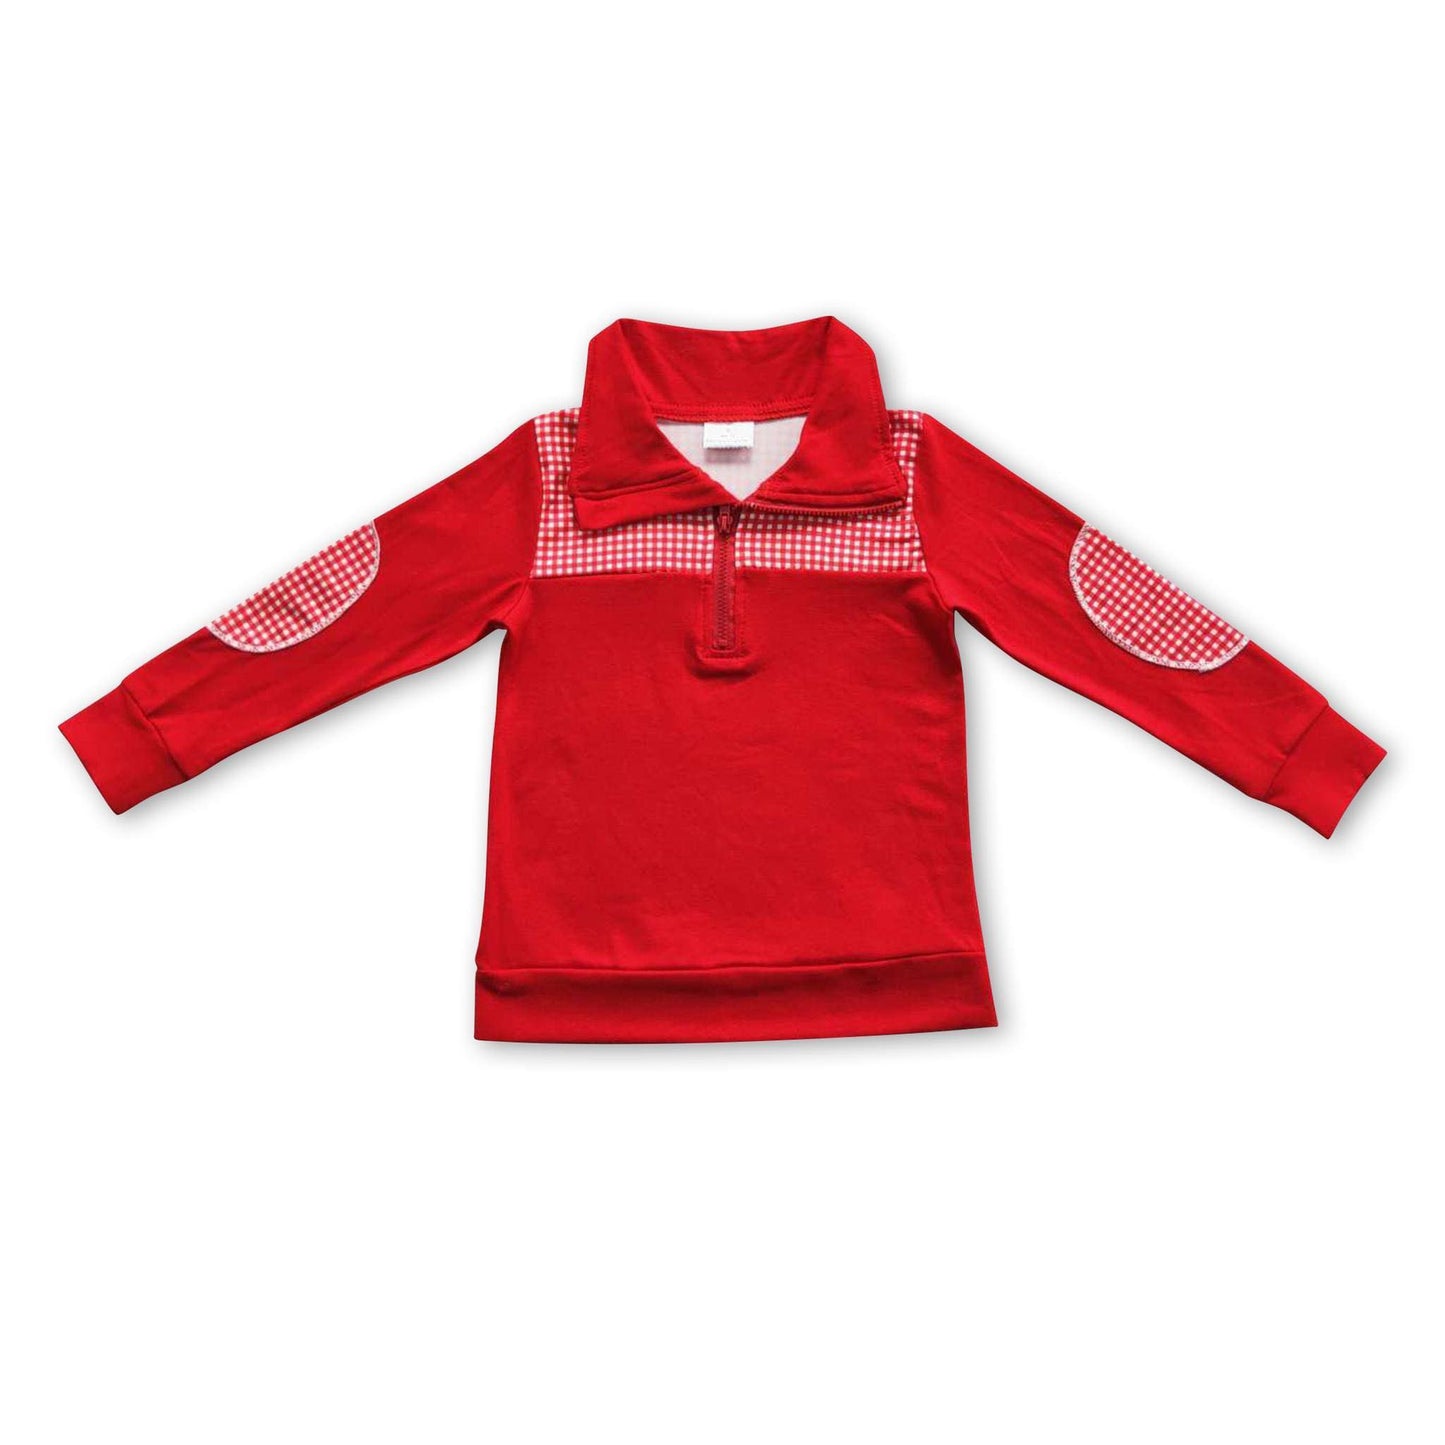 ᴡᴇᴇᴋʟʏ ᴘʀᴇ ᴏʀᴅᴇʀ Pullover- Red Plaid with Elbow Patches Quarter Zip